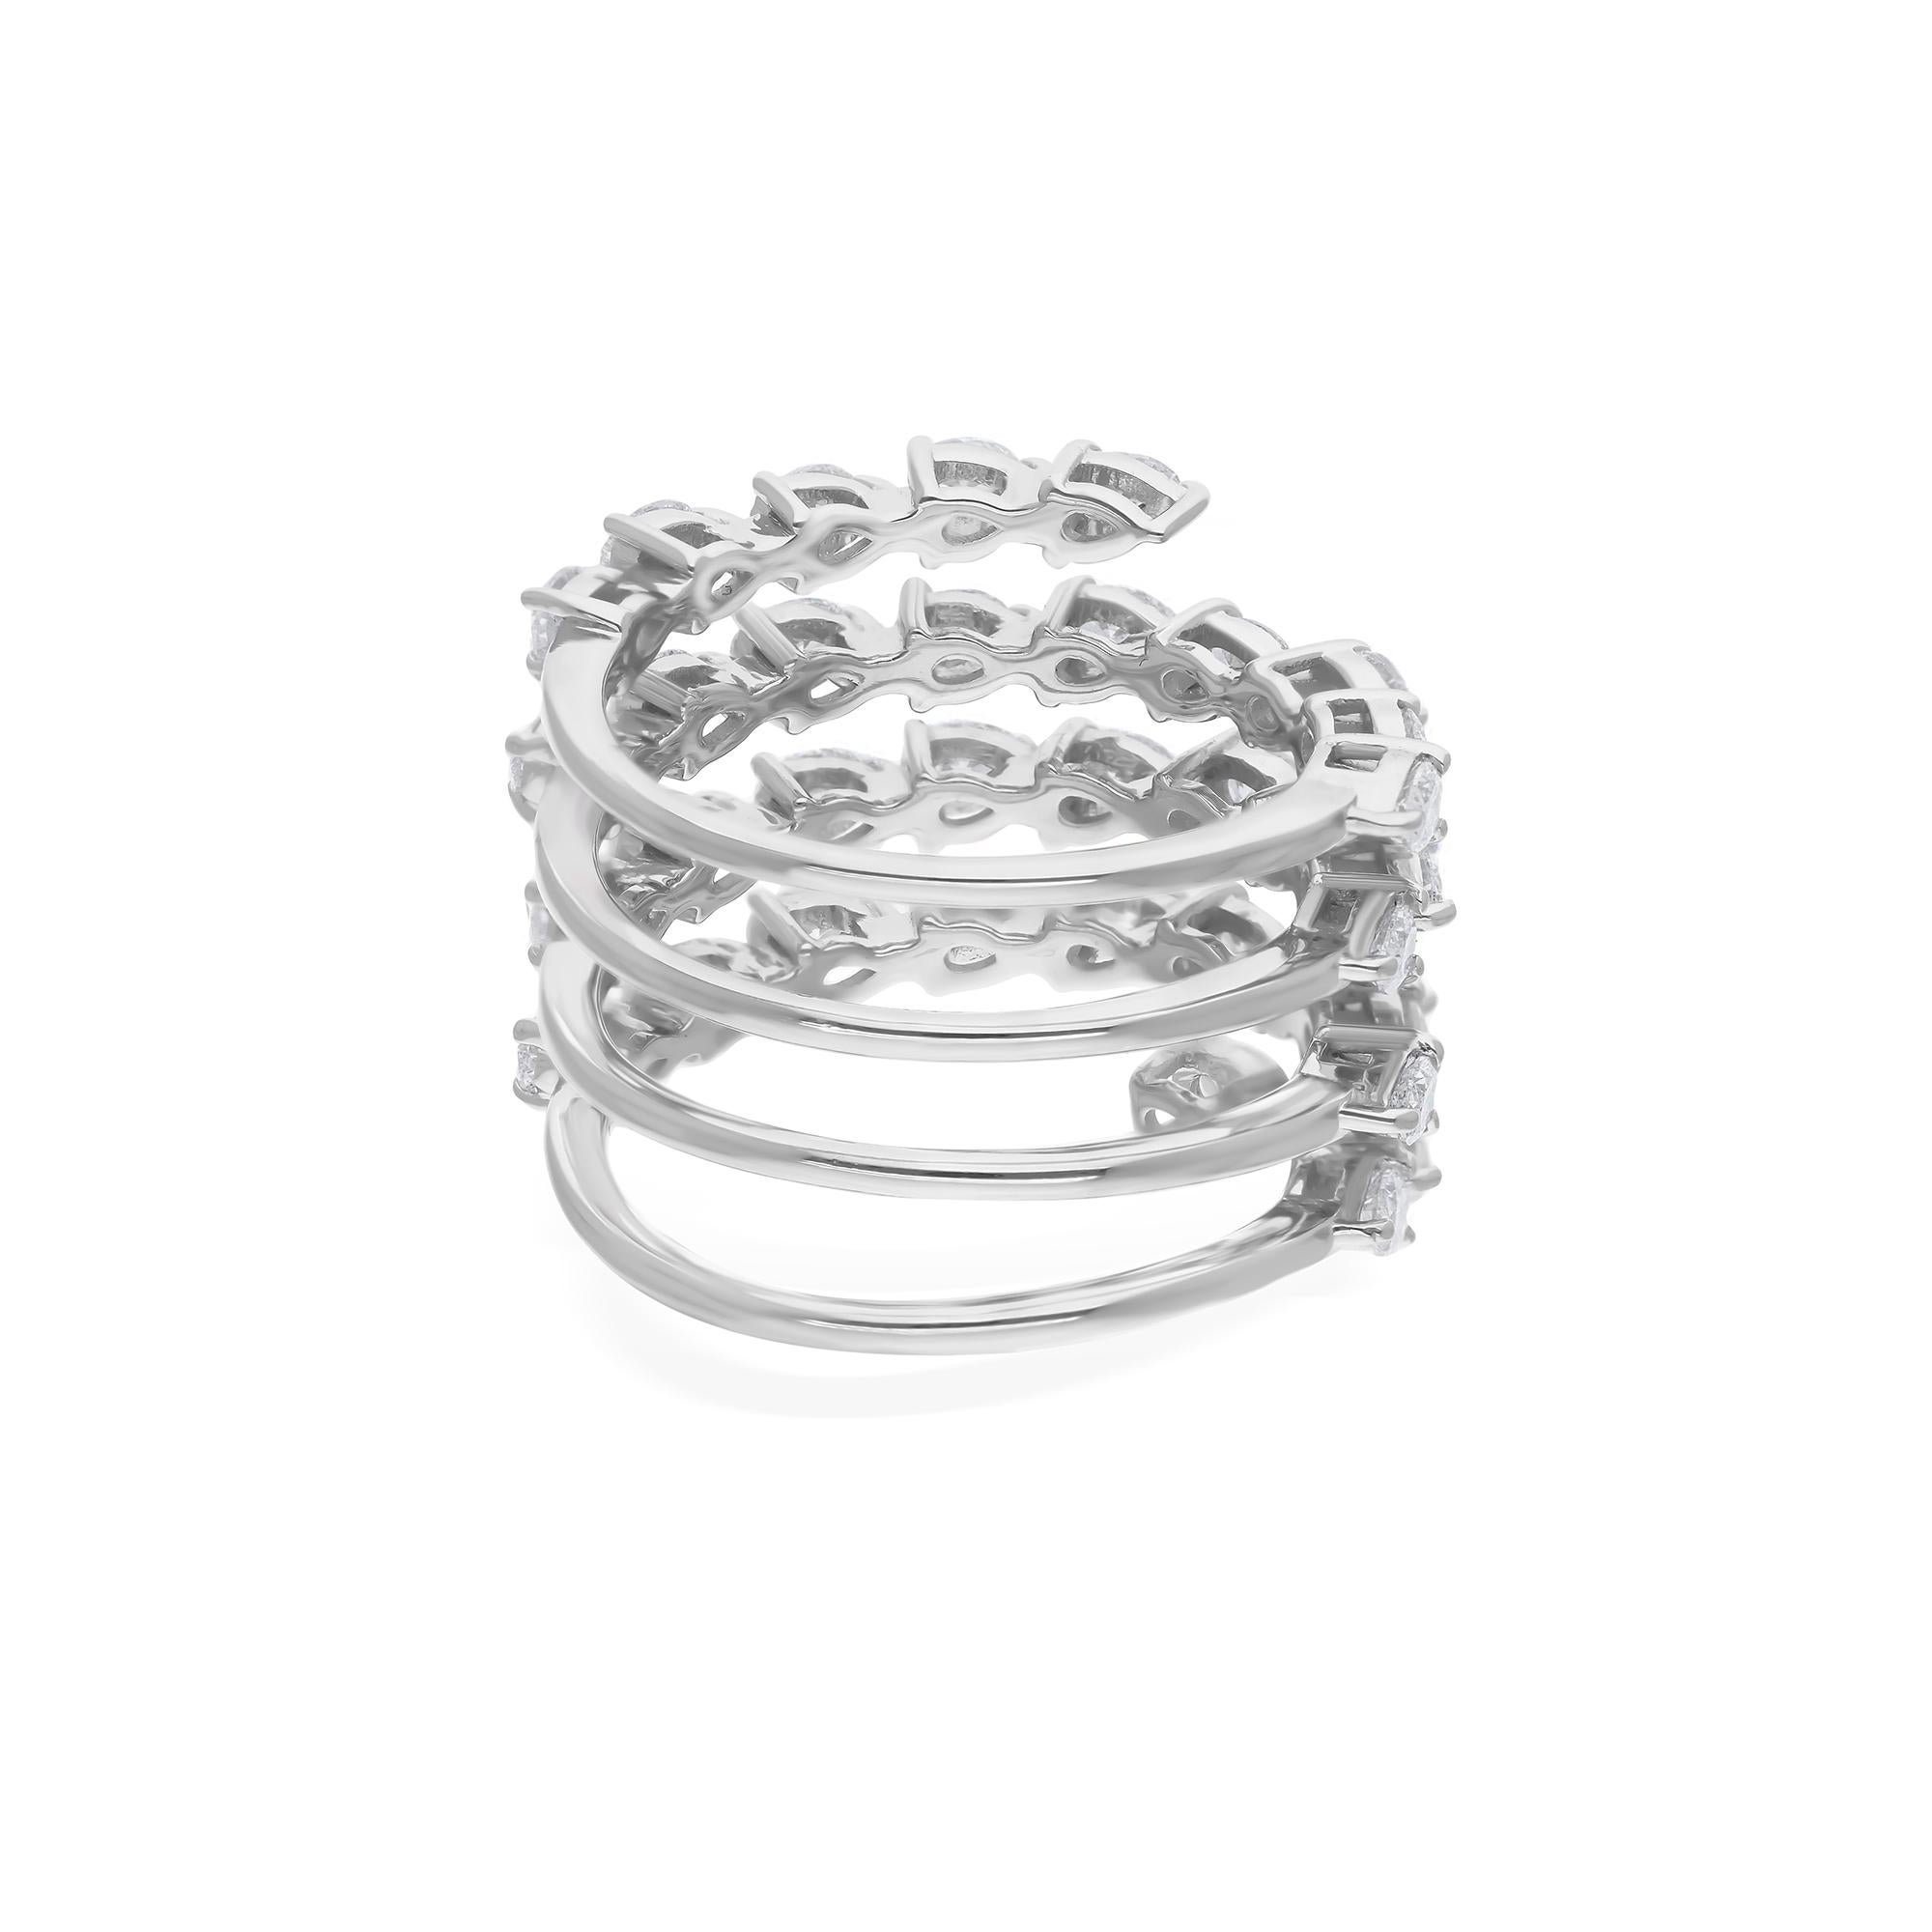 2.08 Carat Oval Shape Diamond Spiral Ring 18 Karat White Gold Handmade Jewelry For Sale 2